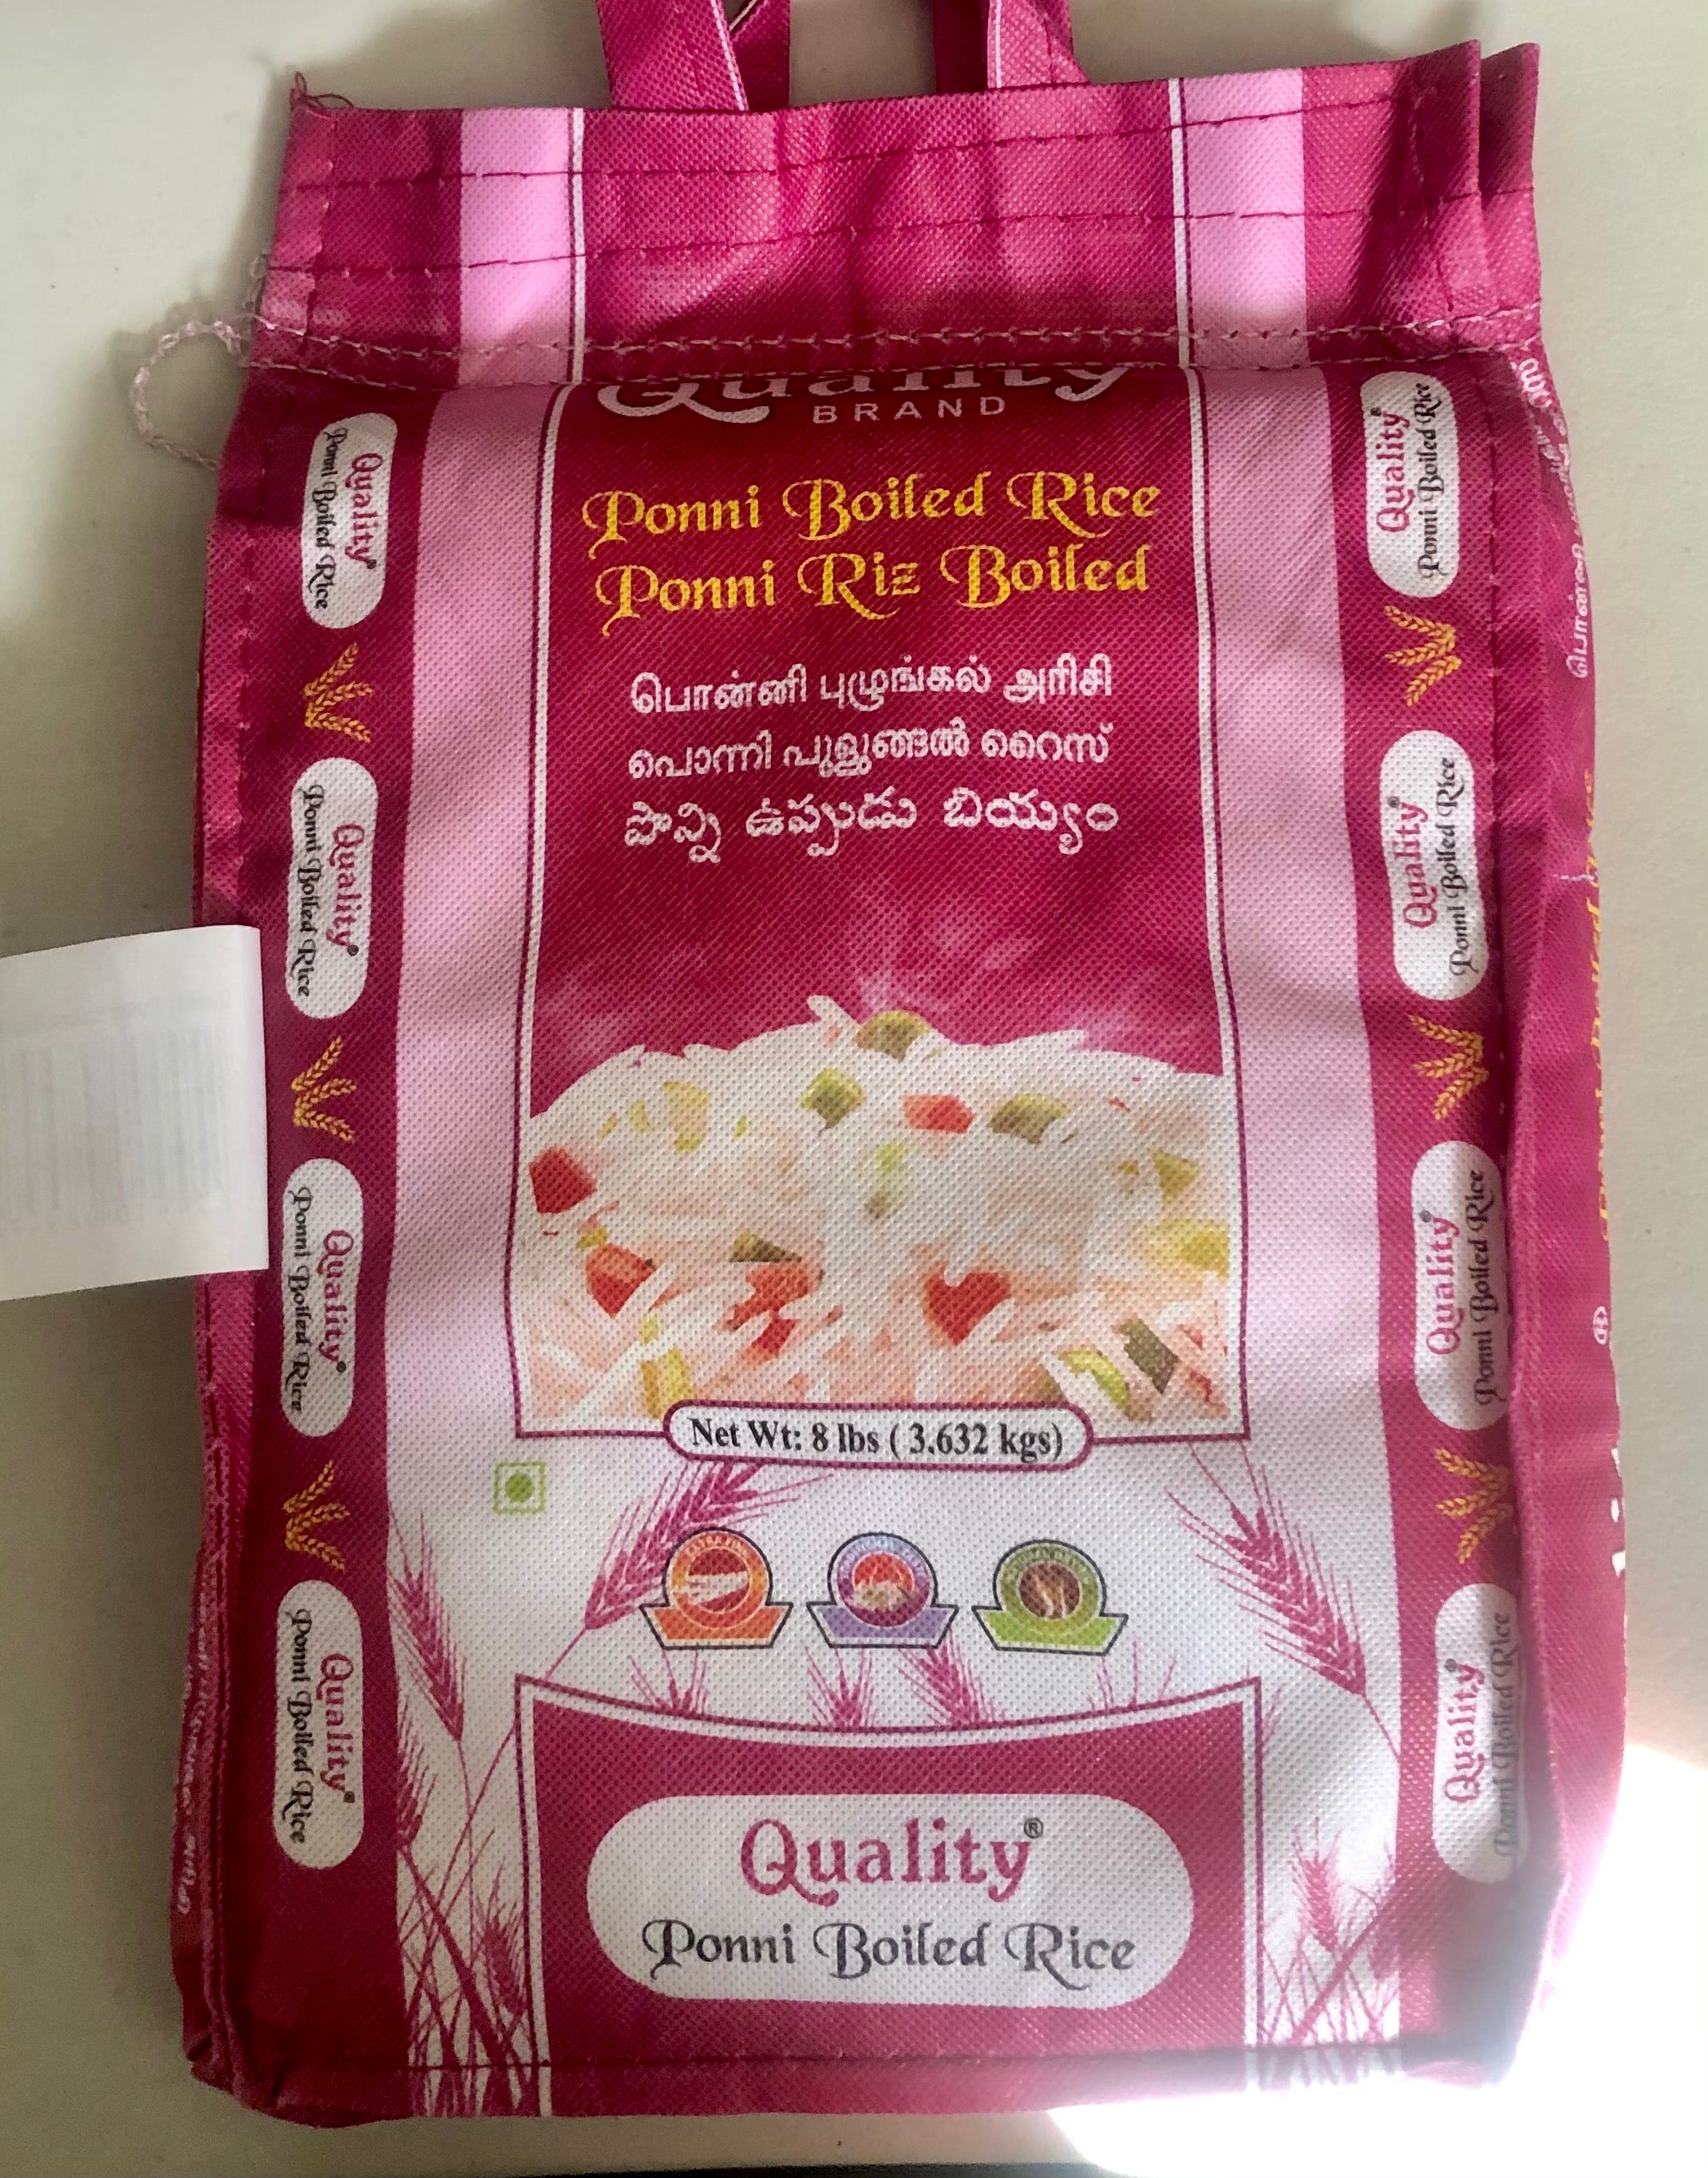 Quality Ponni Boiled Rice - 8 lbs